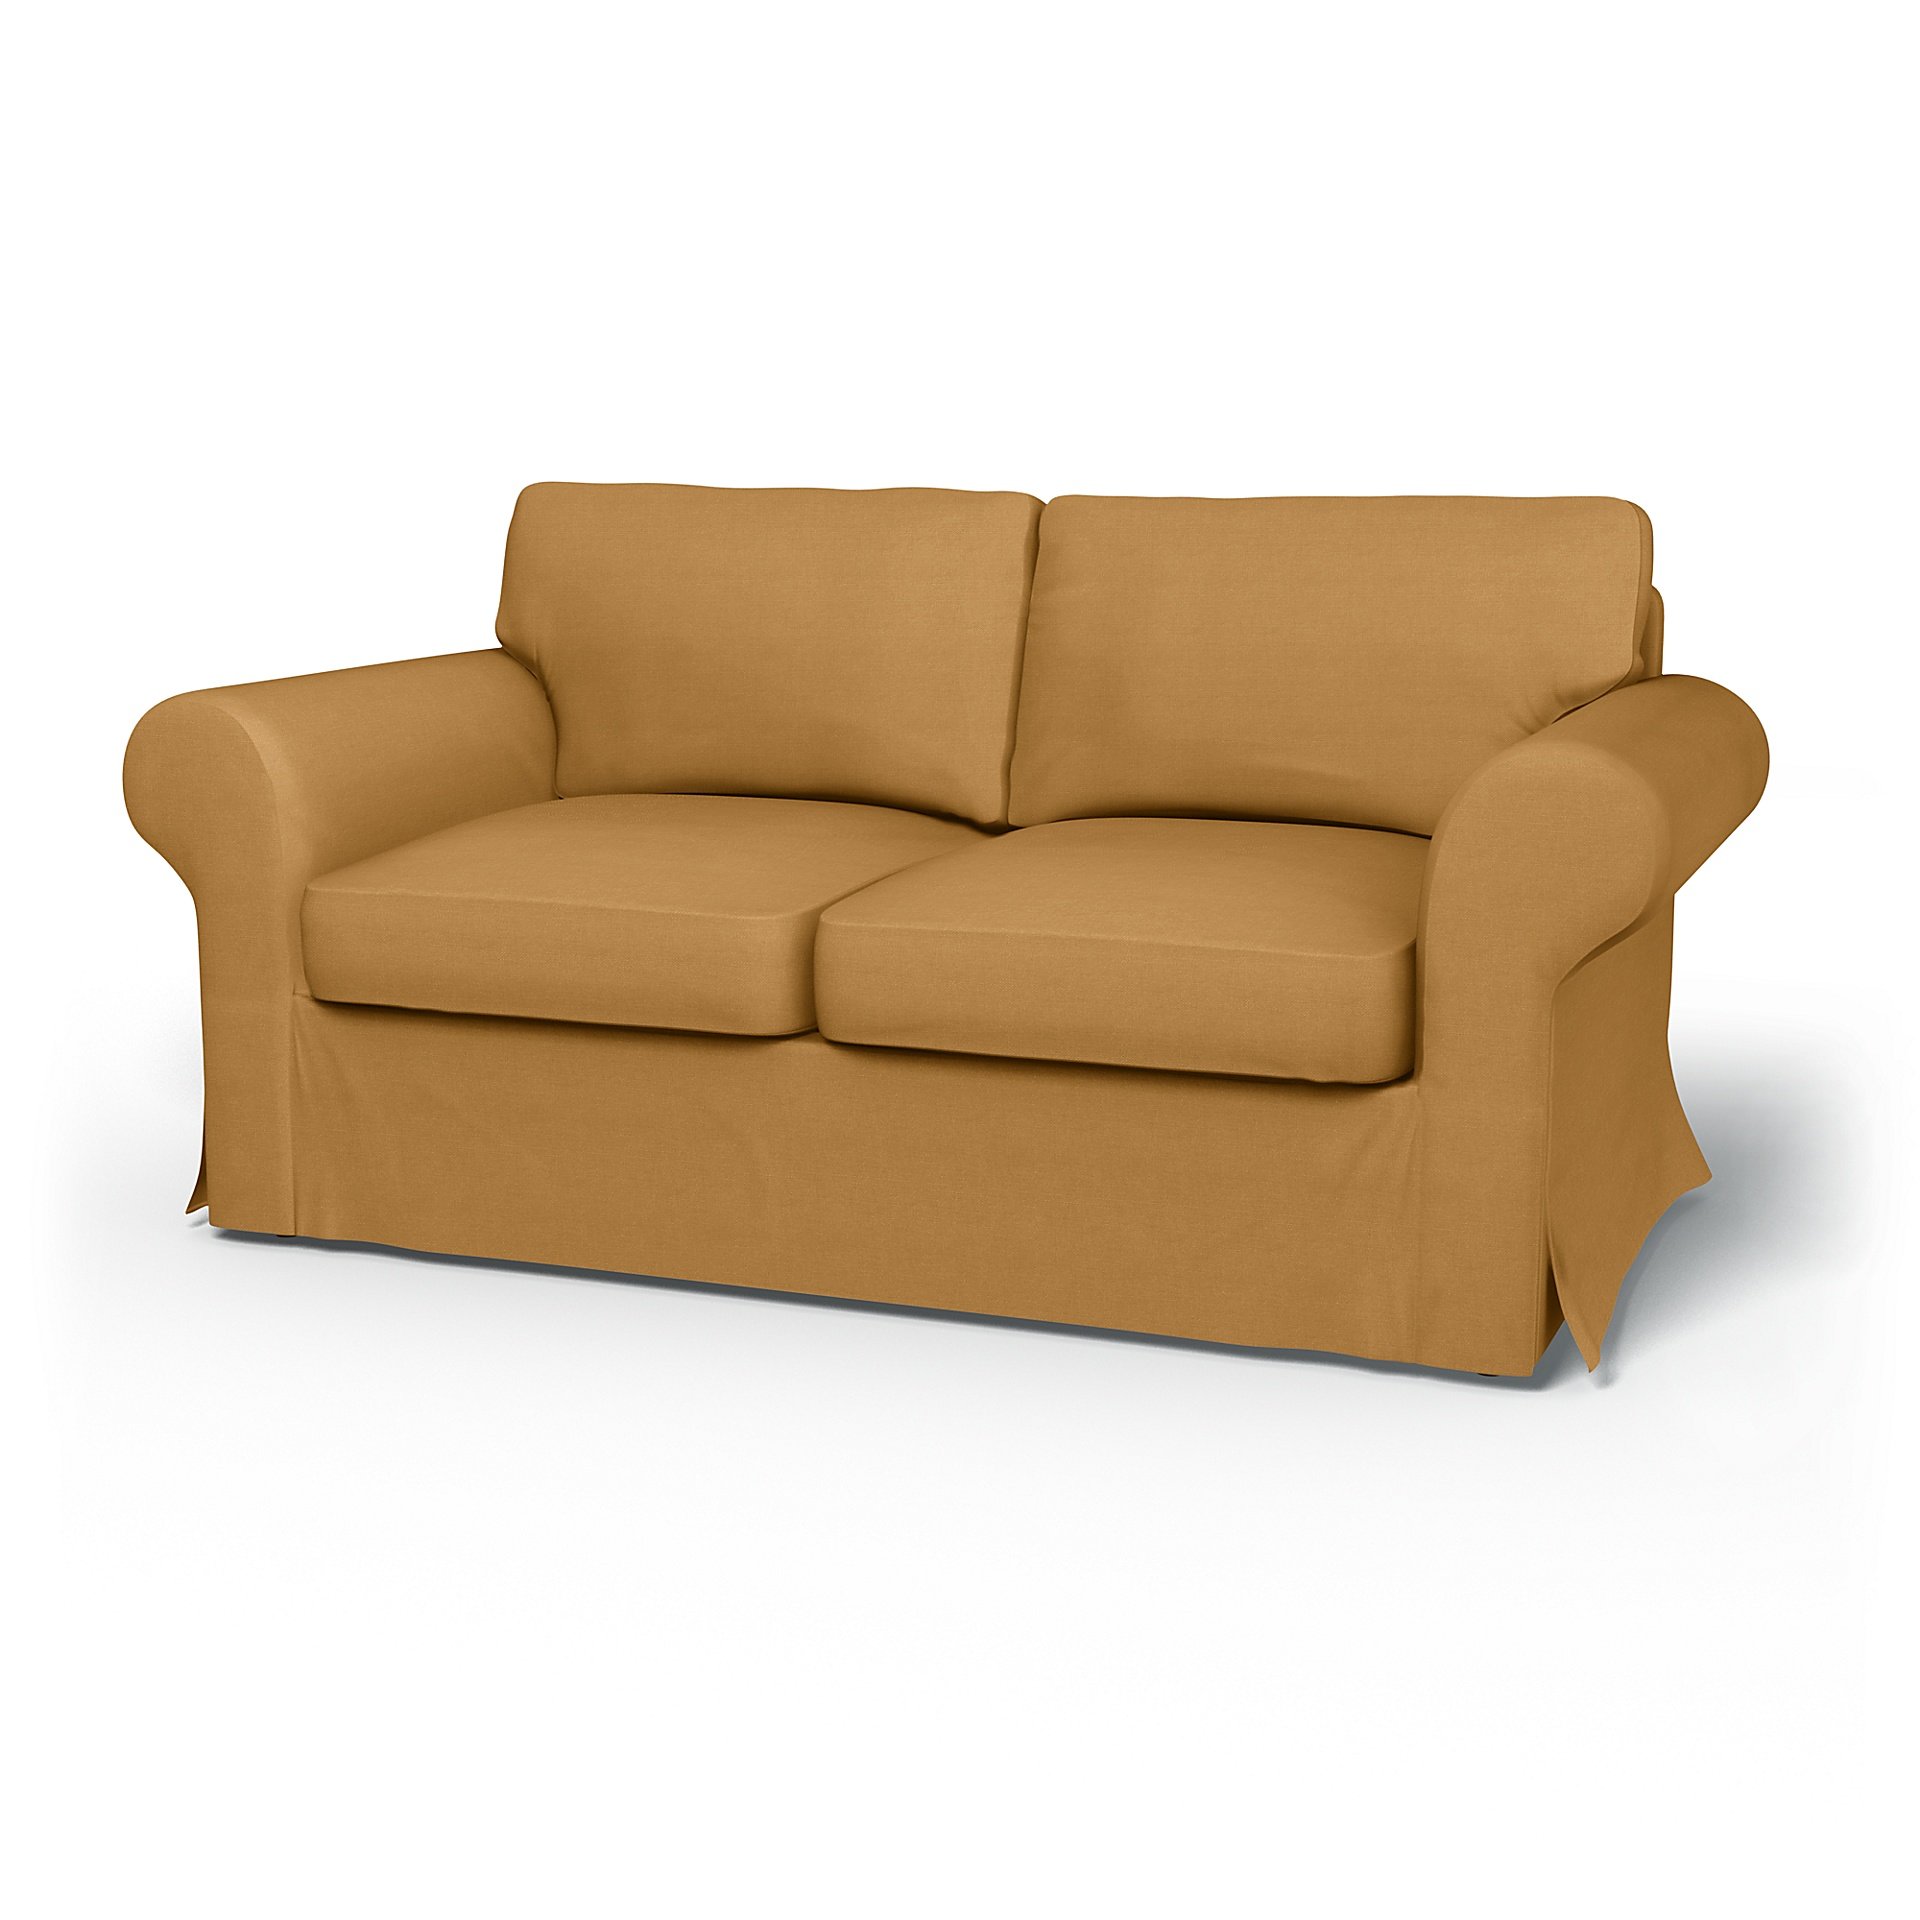 IKEA - Ektorp 2 Seater Sofa Bed Cover, Mustard, Linen - Bemz